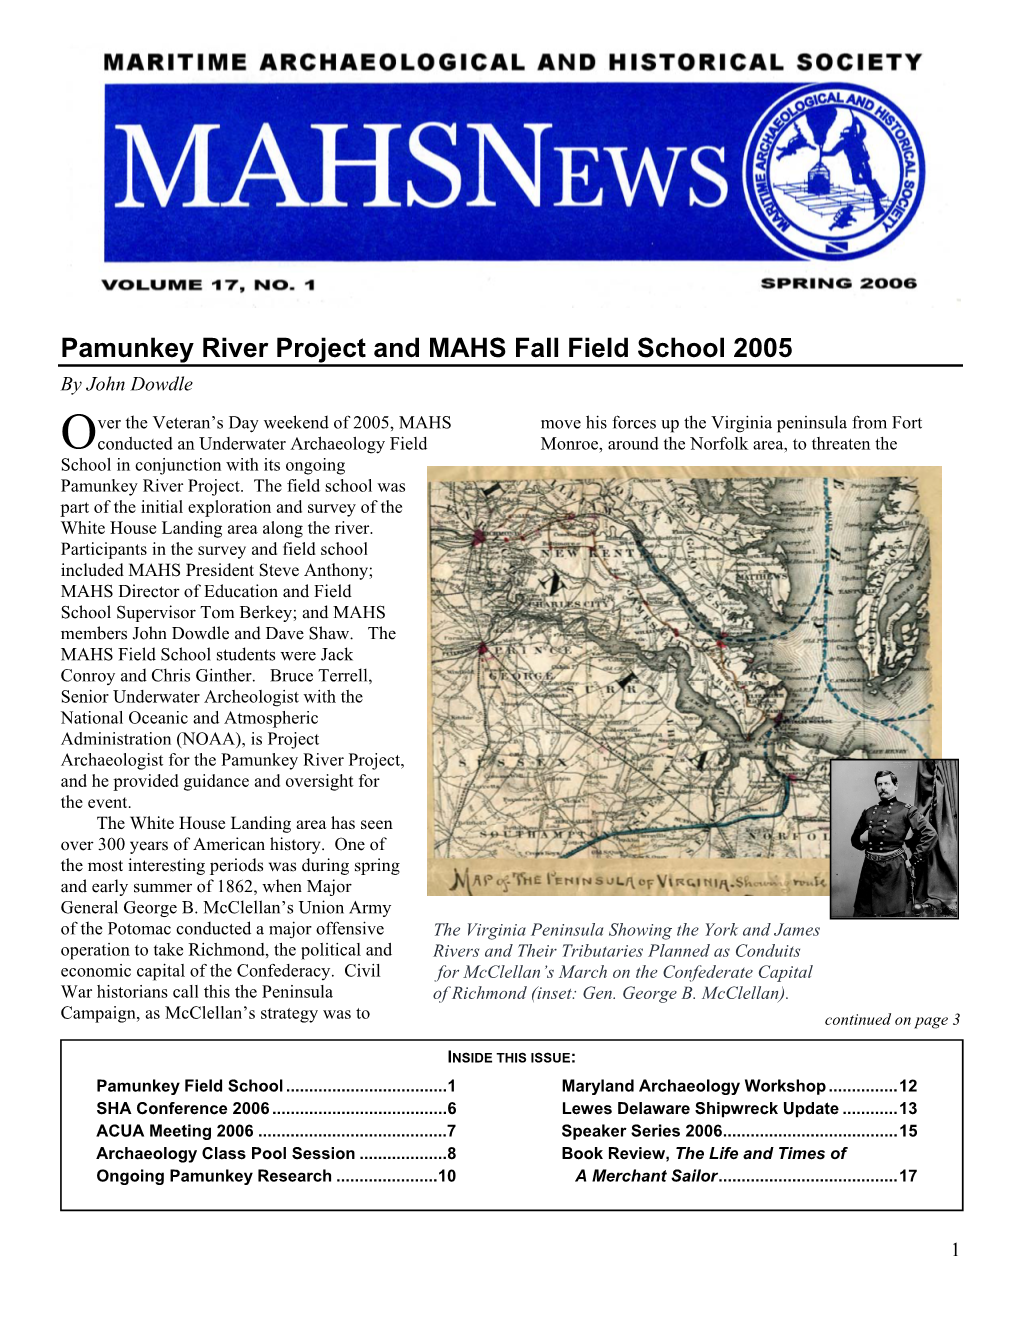 Pamunkey River Project and MAHS Fall Field School 2005 by John Dowdle